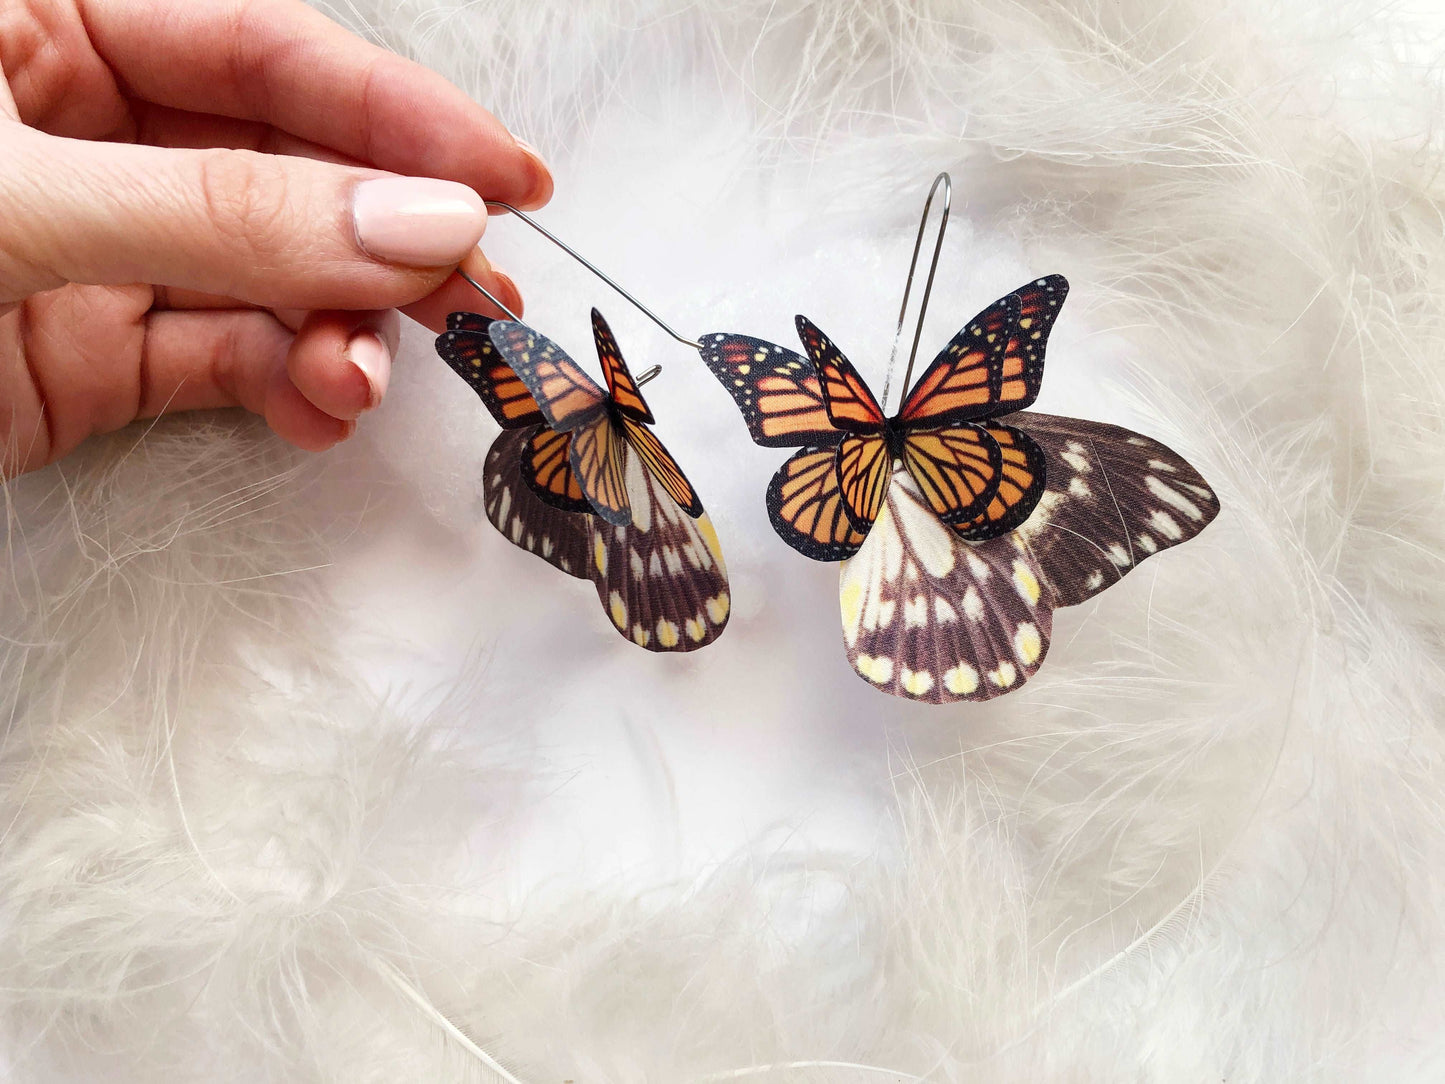 Bohemian butterfly earrings for a stylish statement